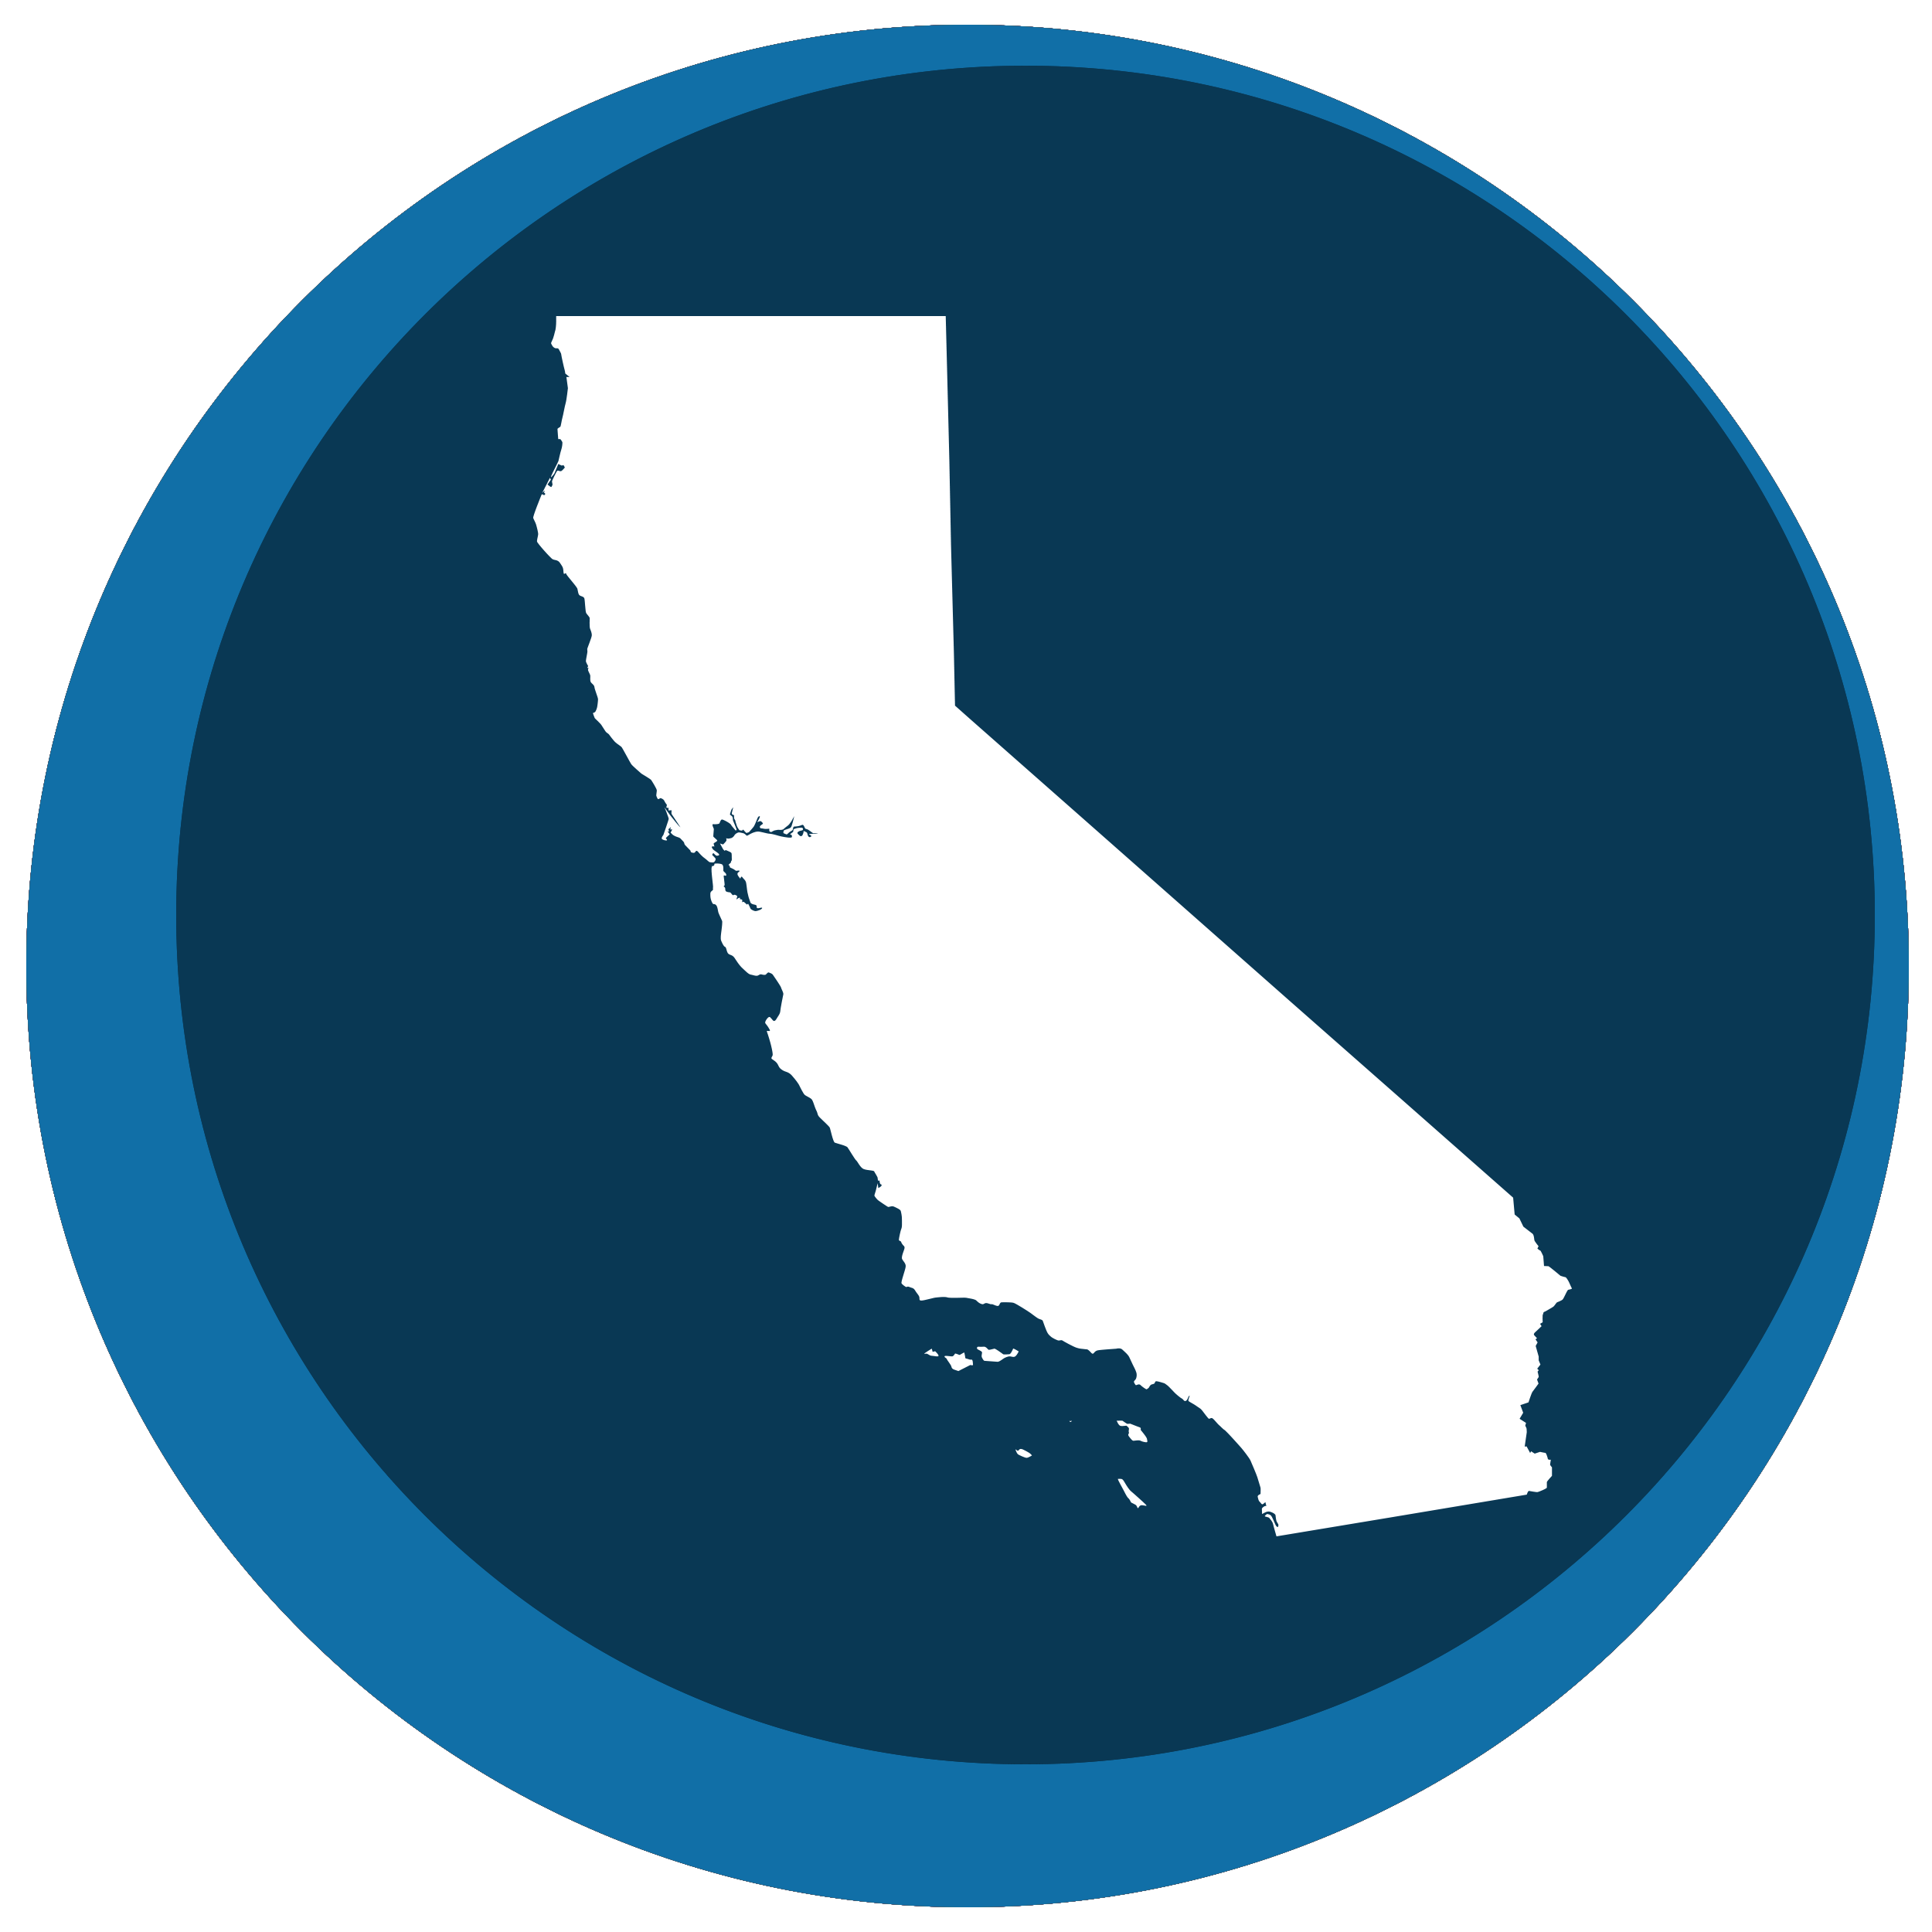 California state shape in a circle